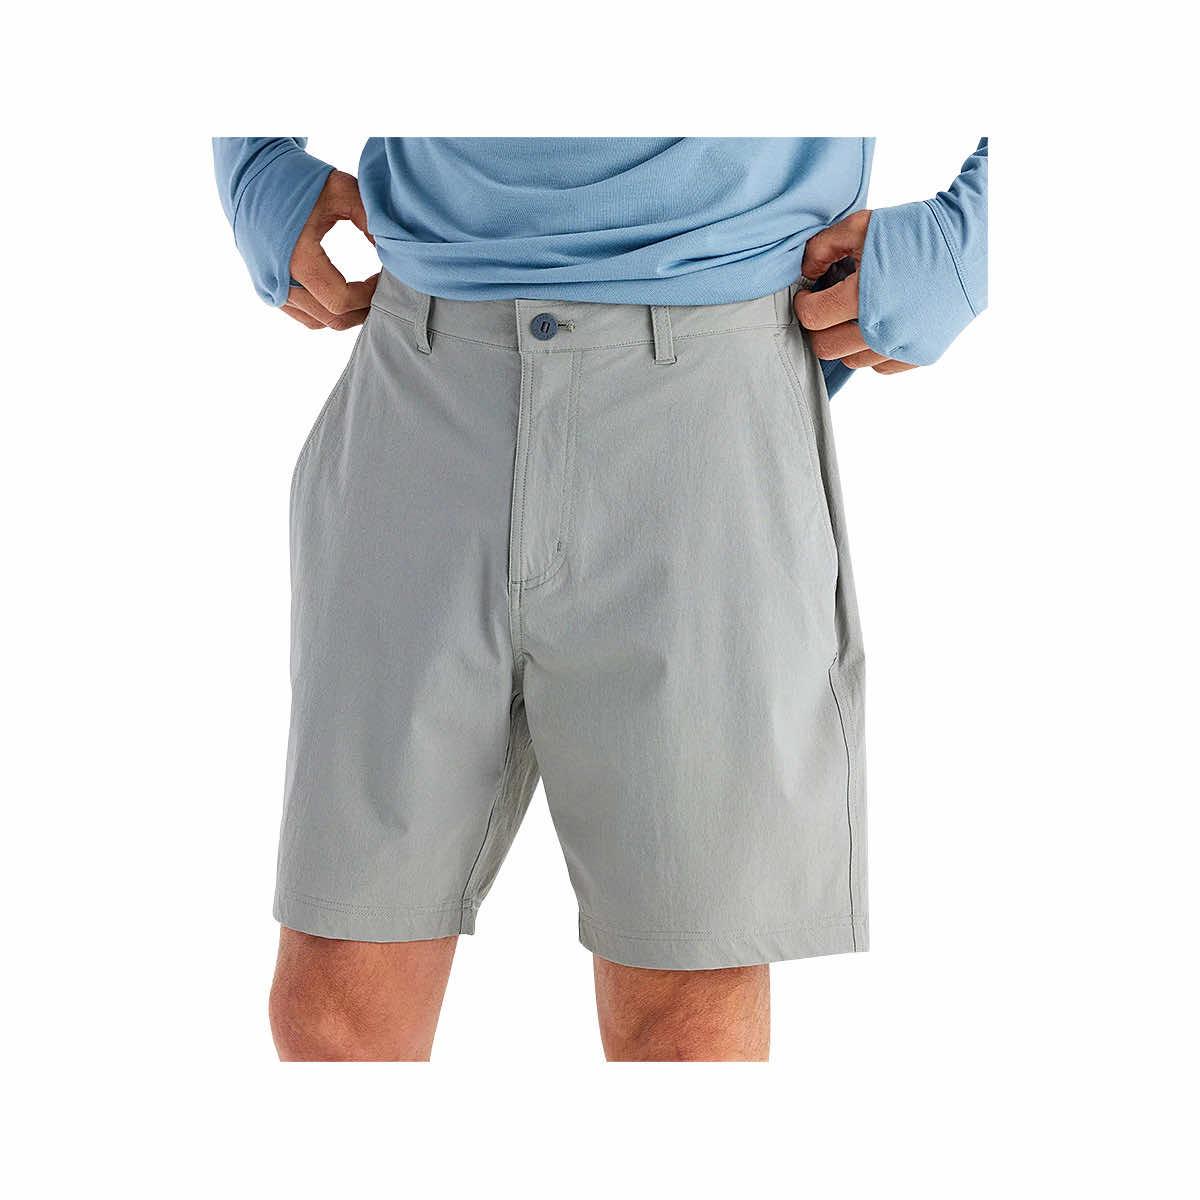  Men's Latitude Shorts